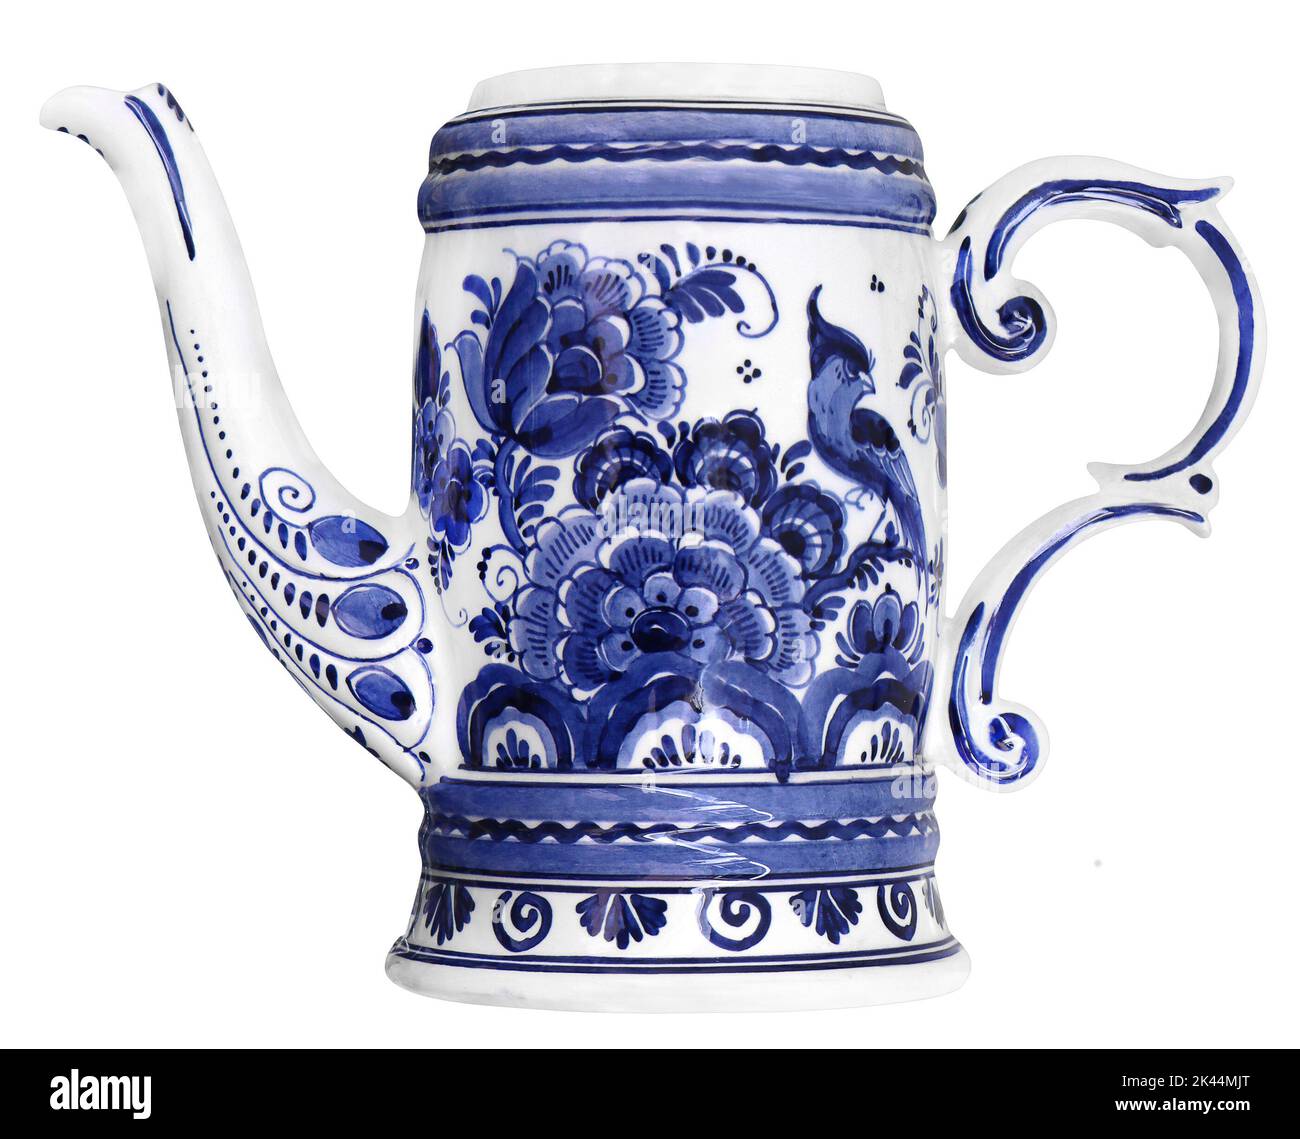 Dutch blue white ceramic teapot, isolated on white background Stock Photo